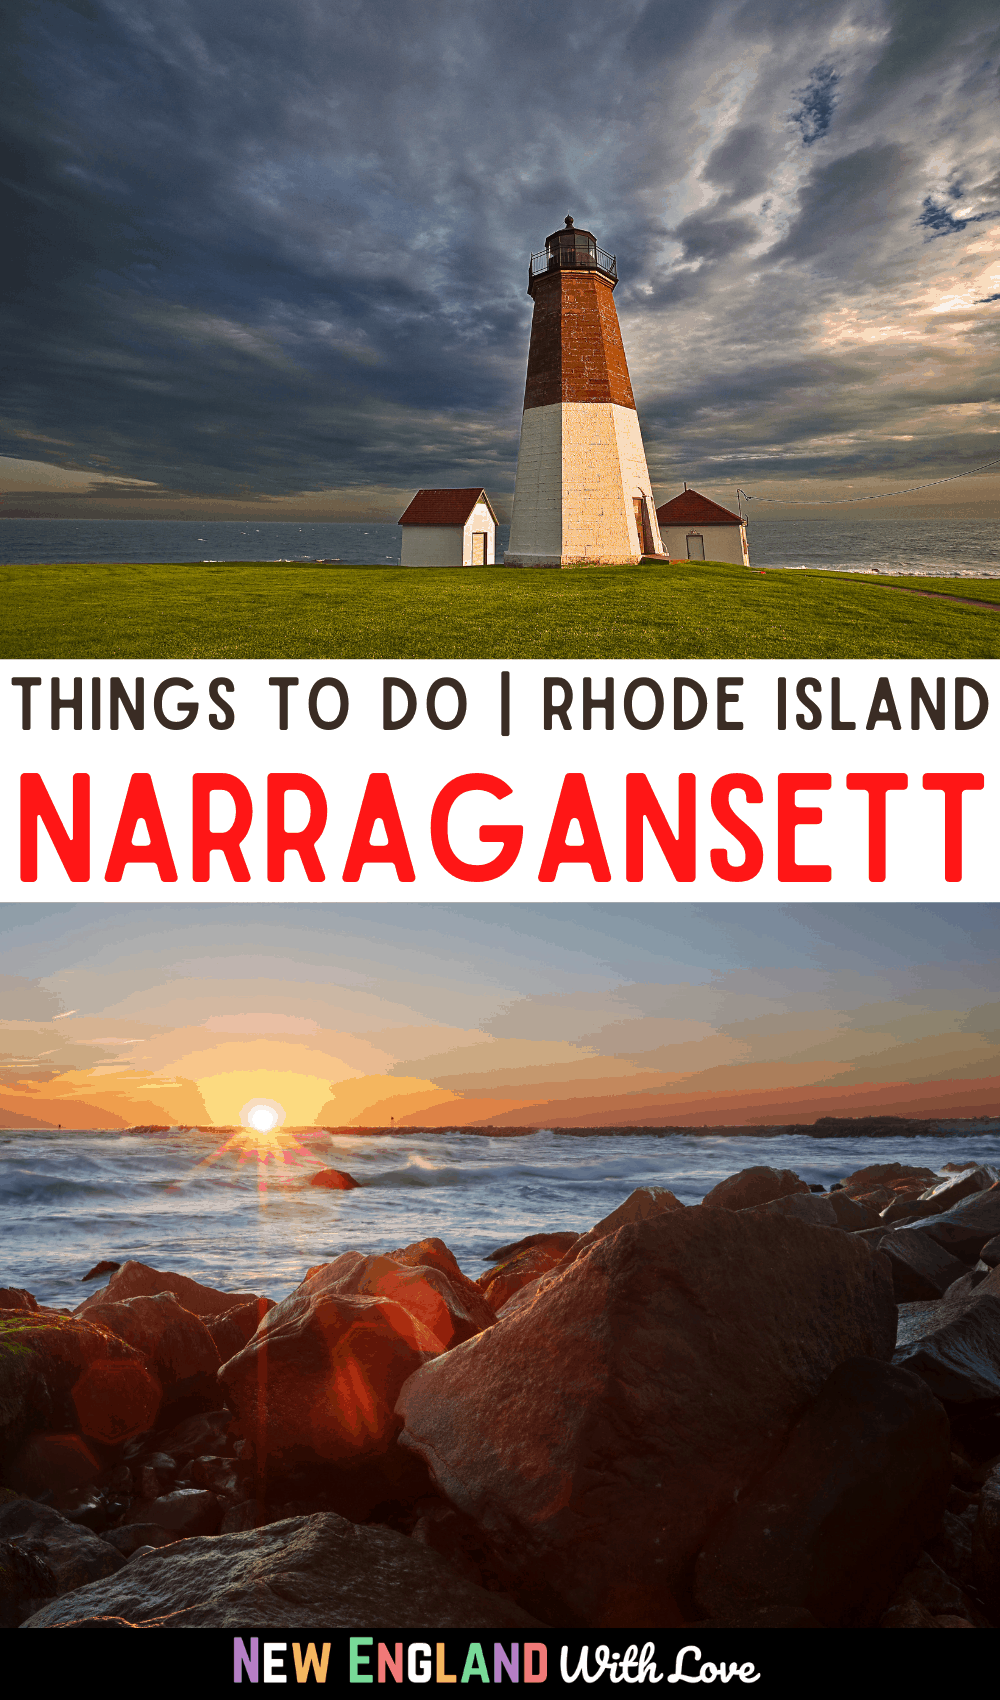 Pinterest graphic reading "THINGS TO DO RHODE ISLAND NARRAGANSETT"